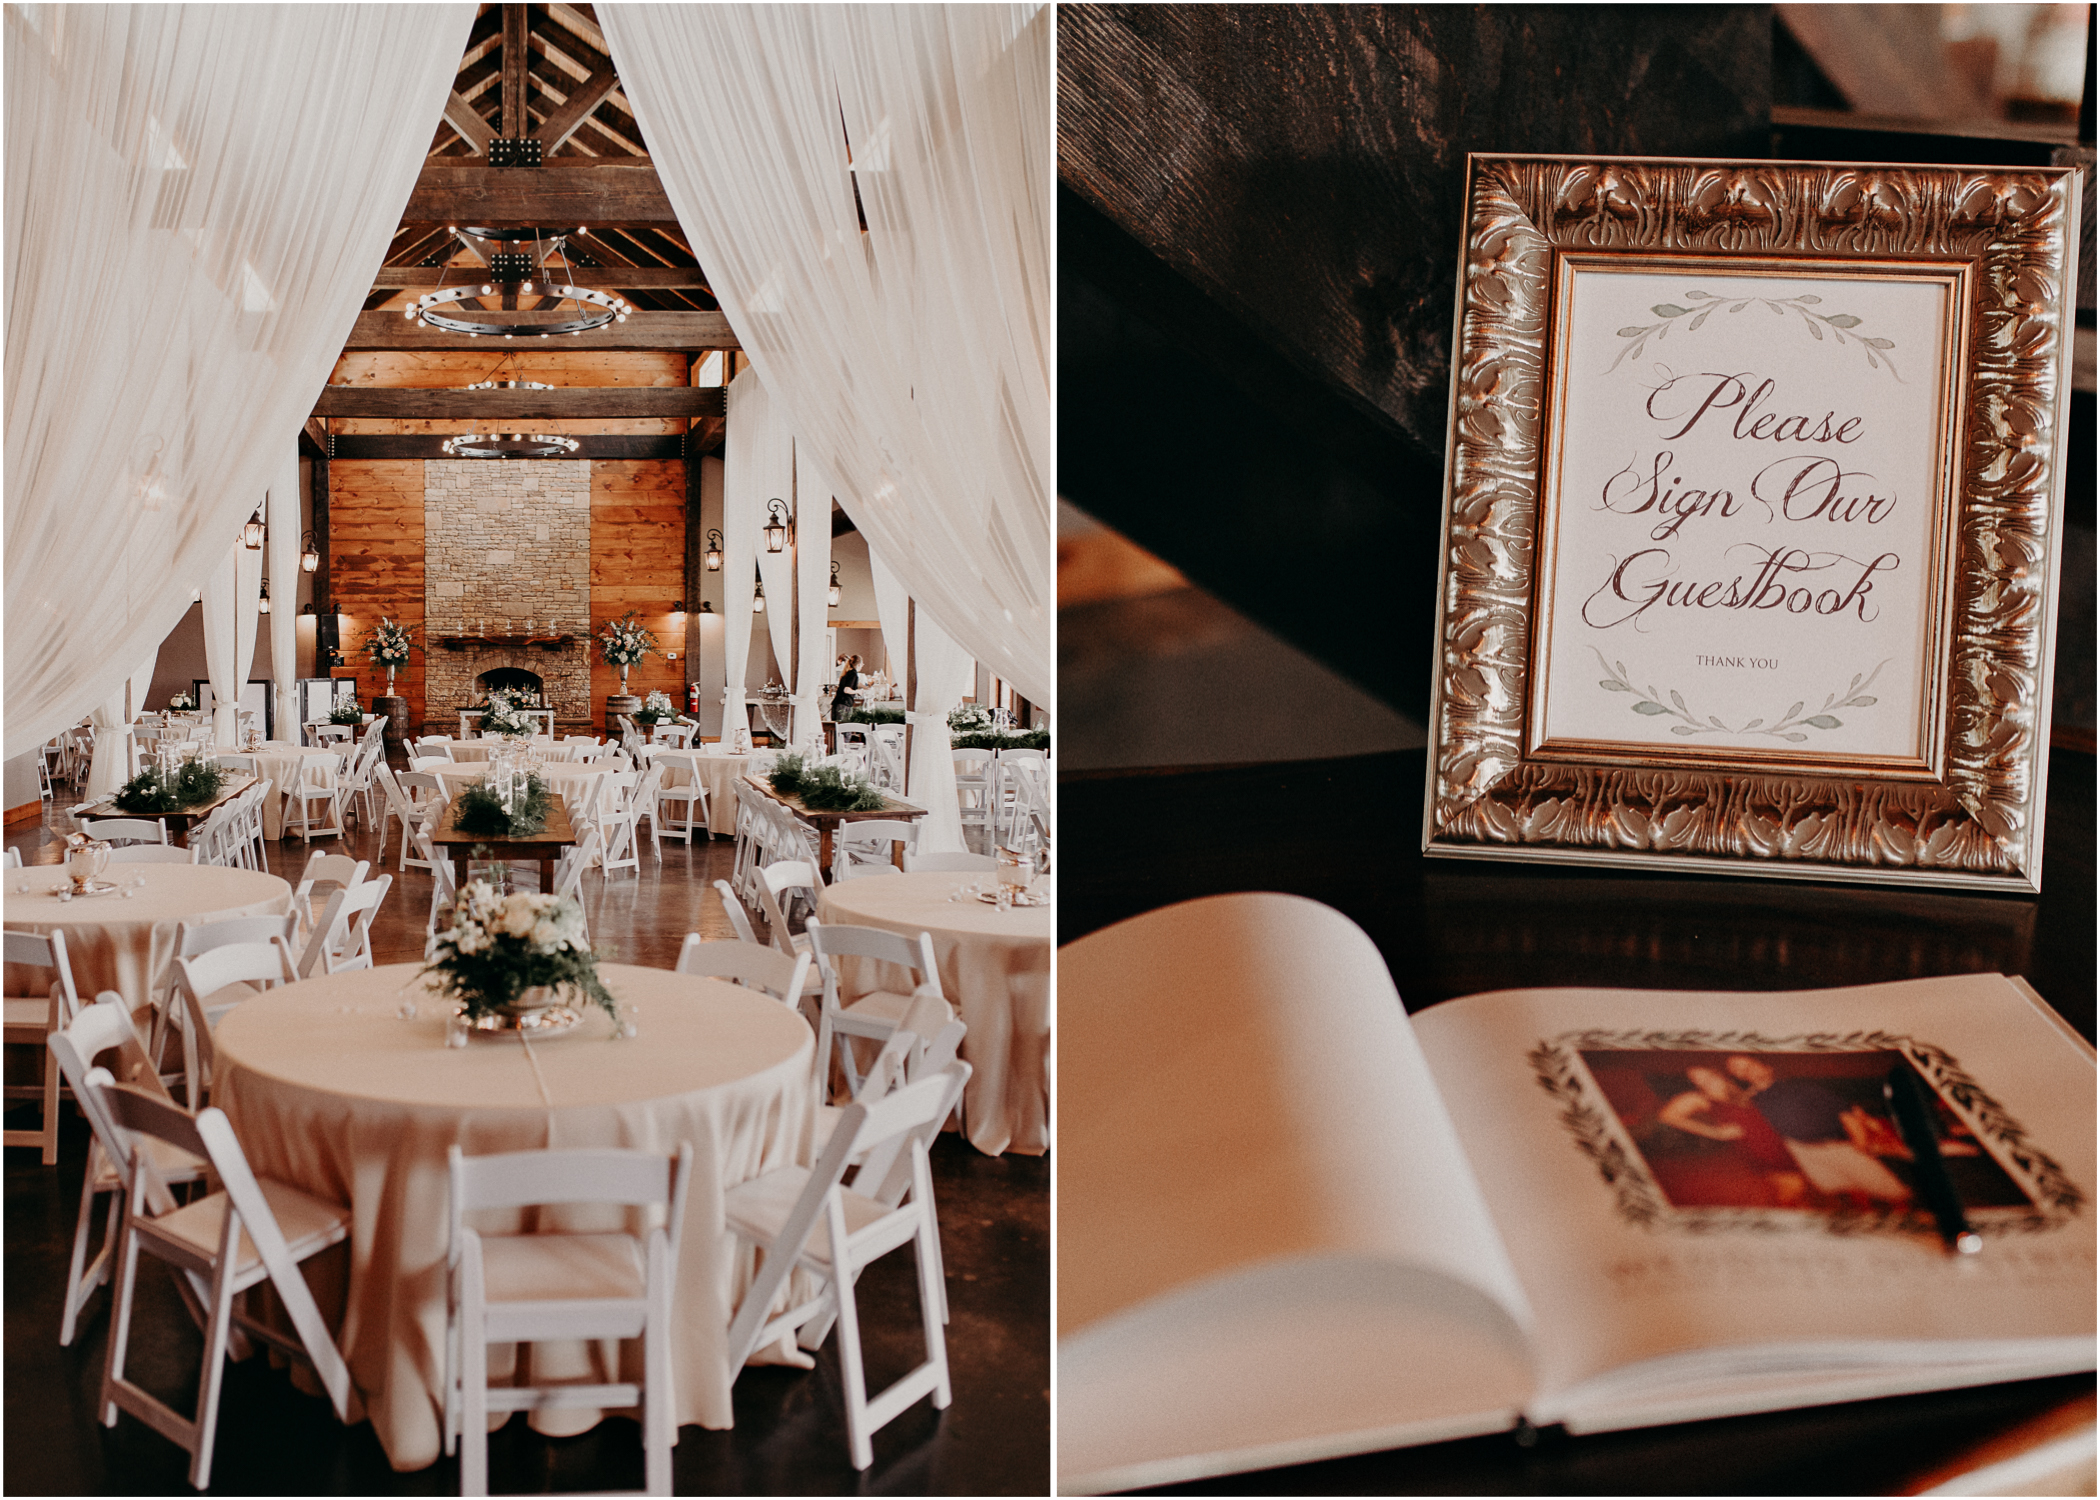 37 - Wedding guest book and venue decor .jpg